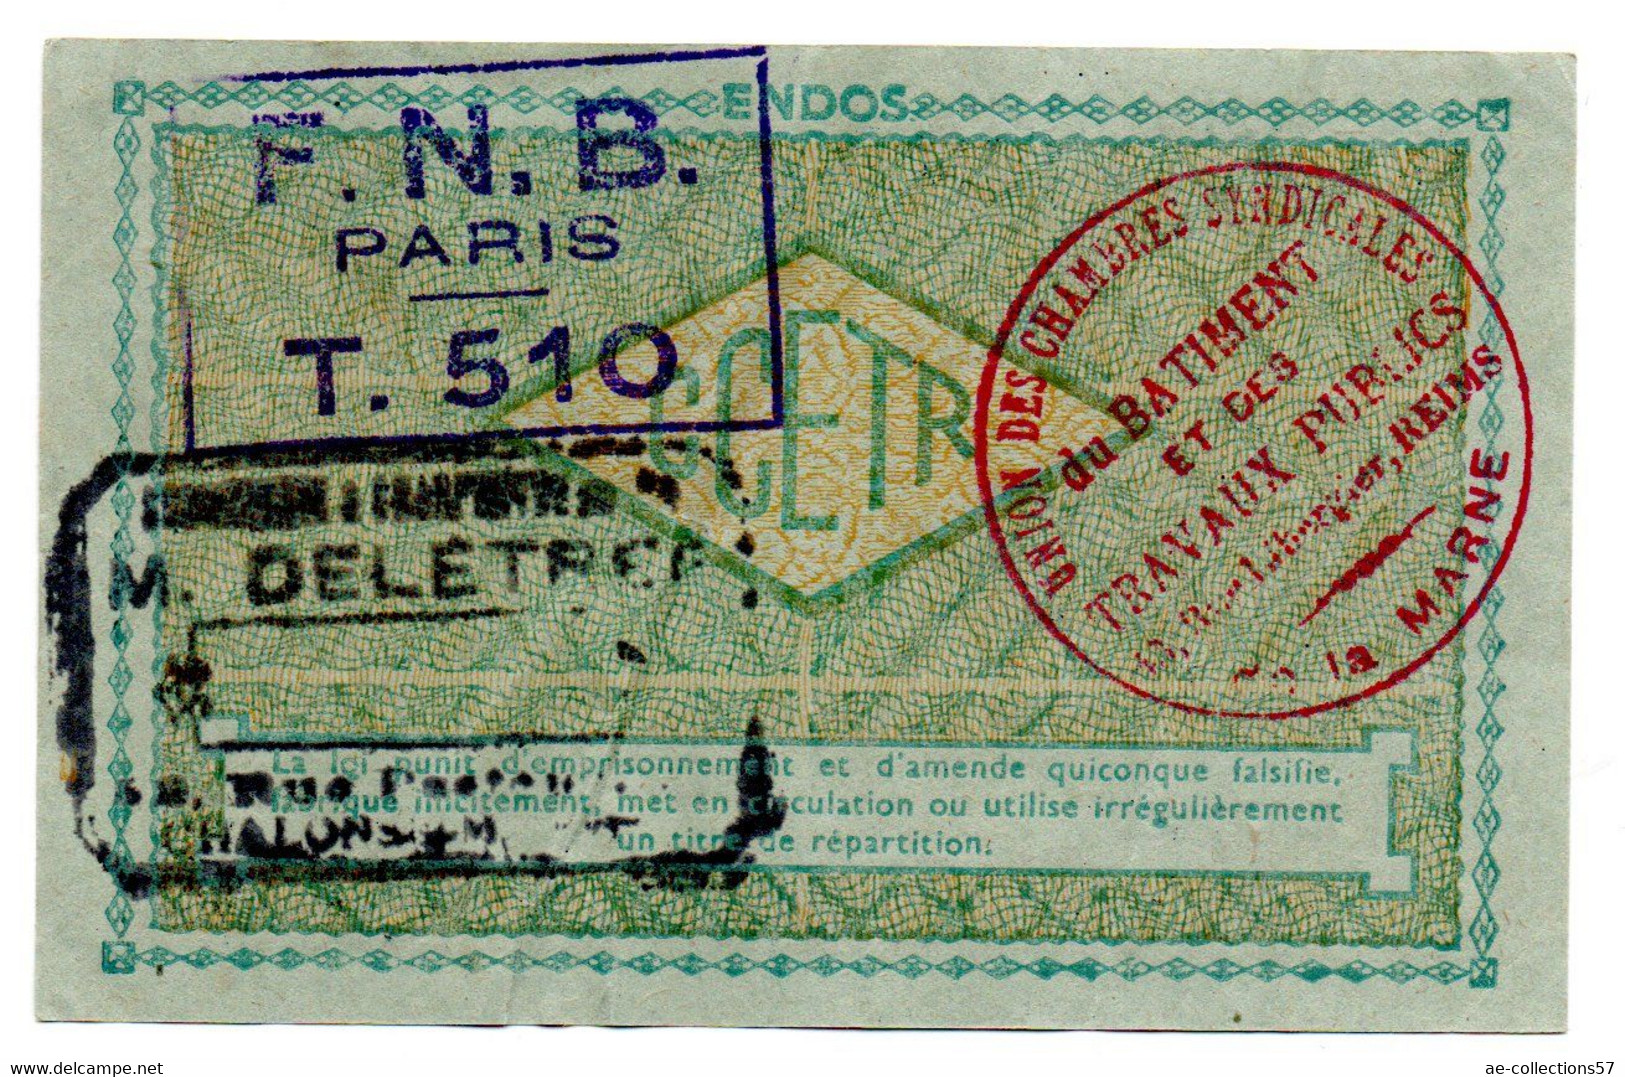 France -  50 KG Acier Ordinaire 31/12/1948 -  O C R P I -  TTB - Notgeld